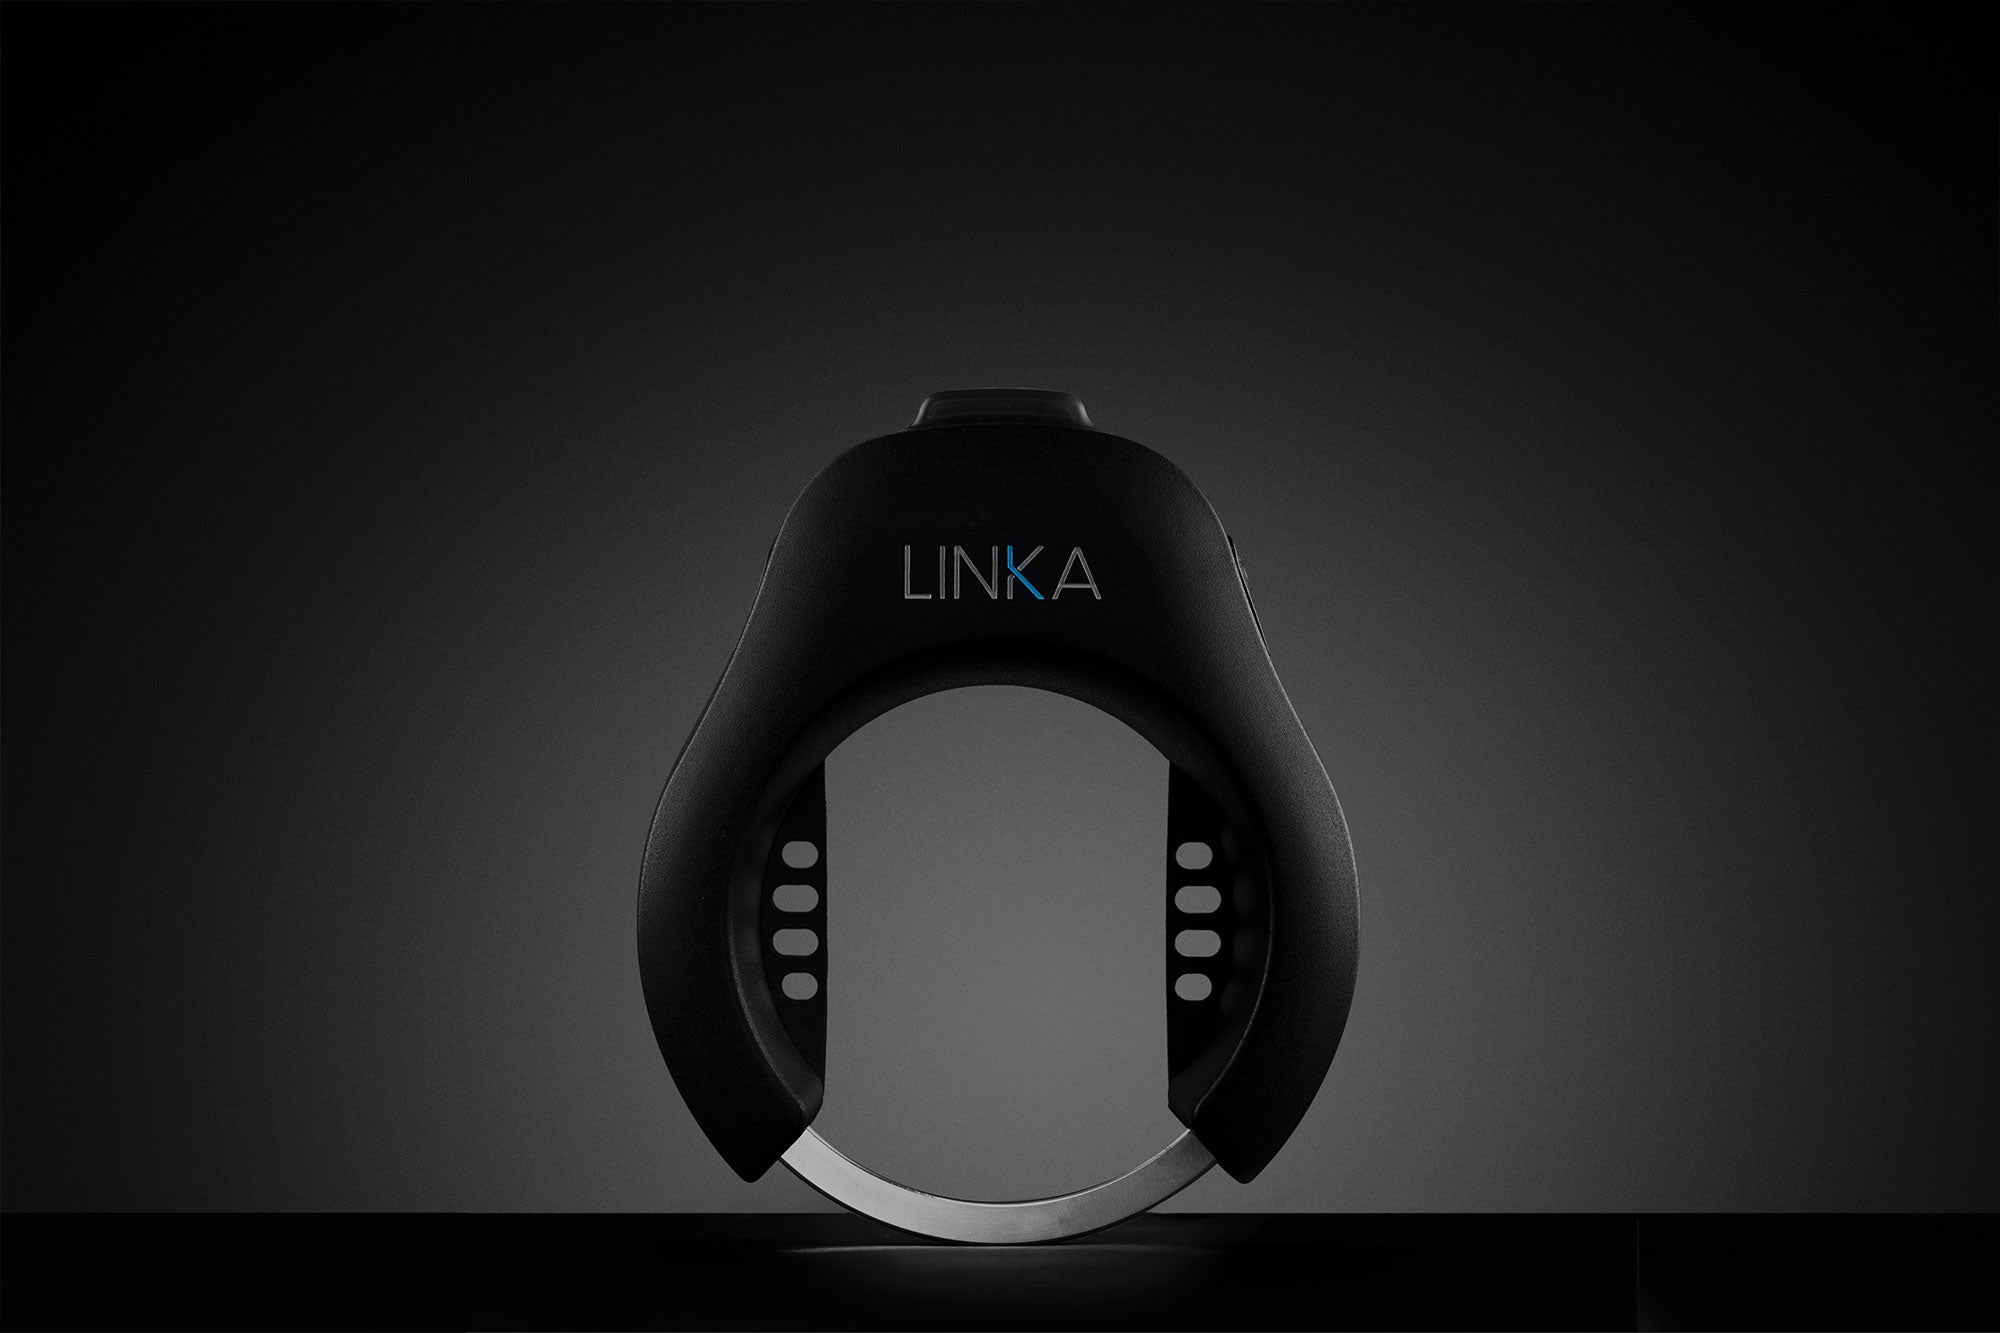 Original LINKA bluetooth enabled smart bike lock for bike sharing